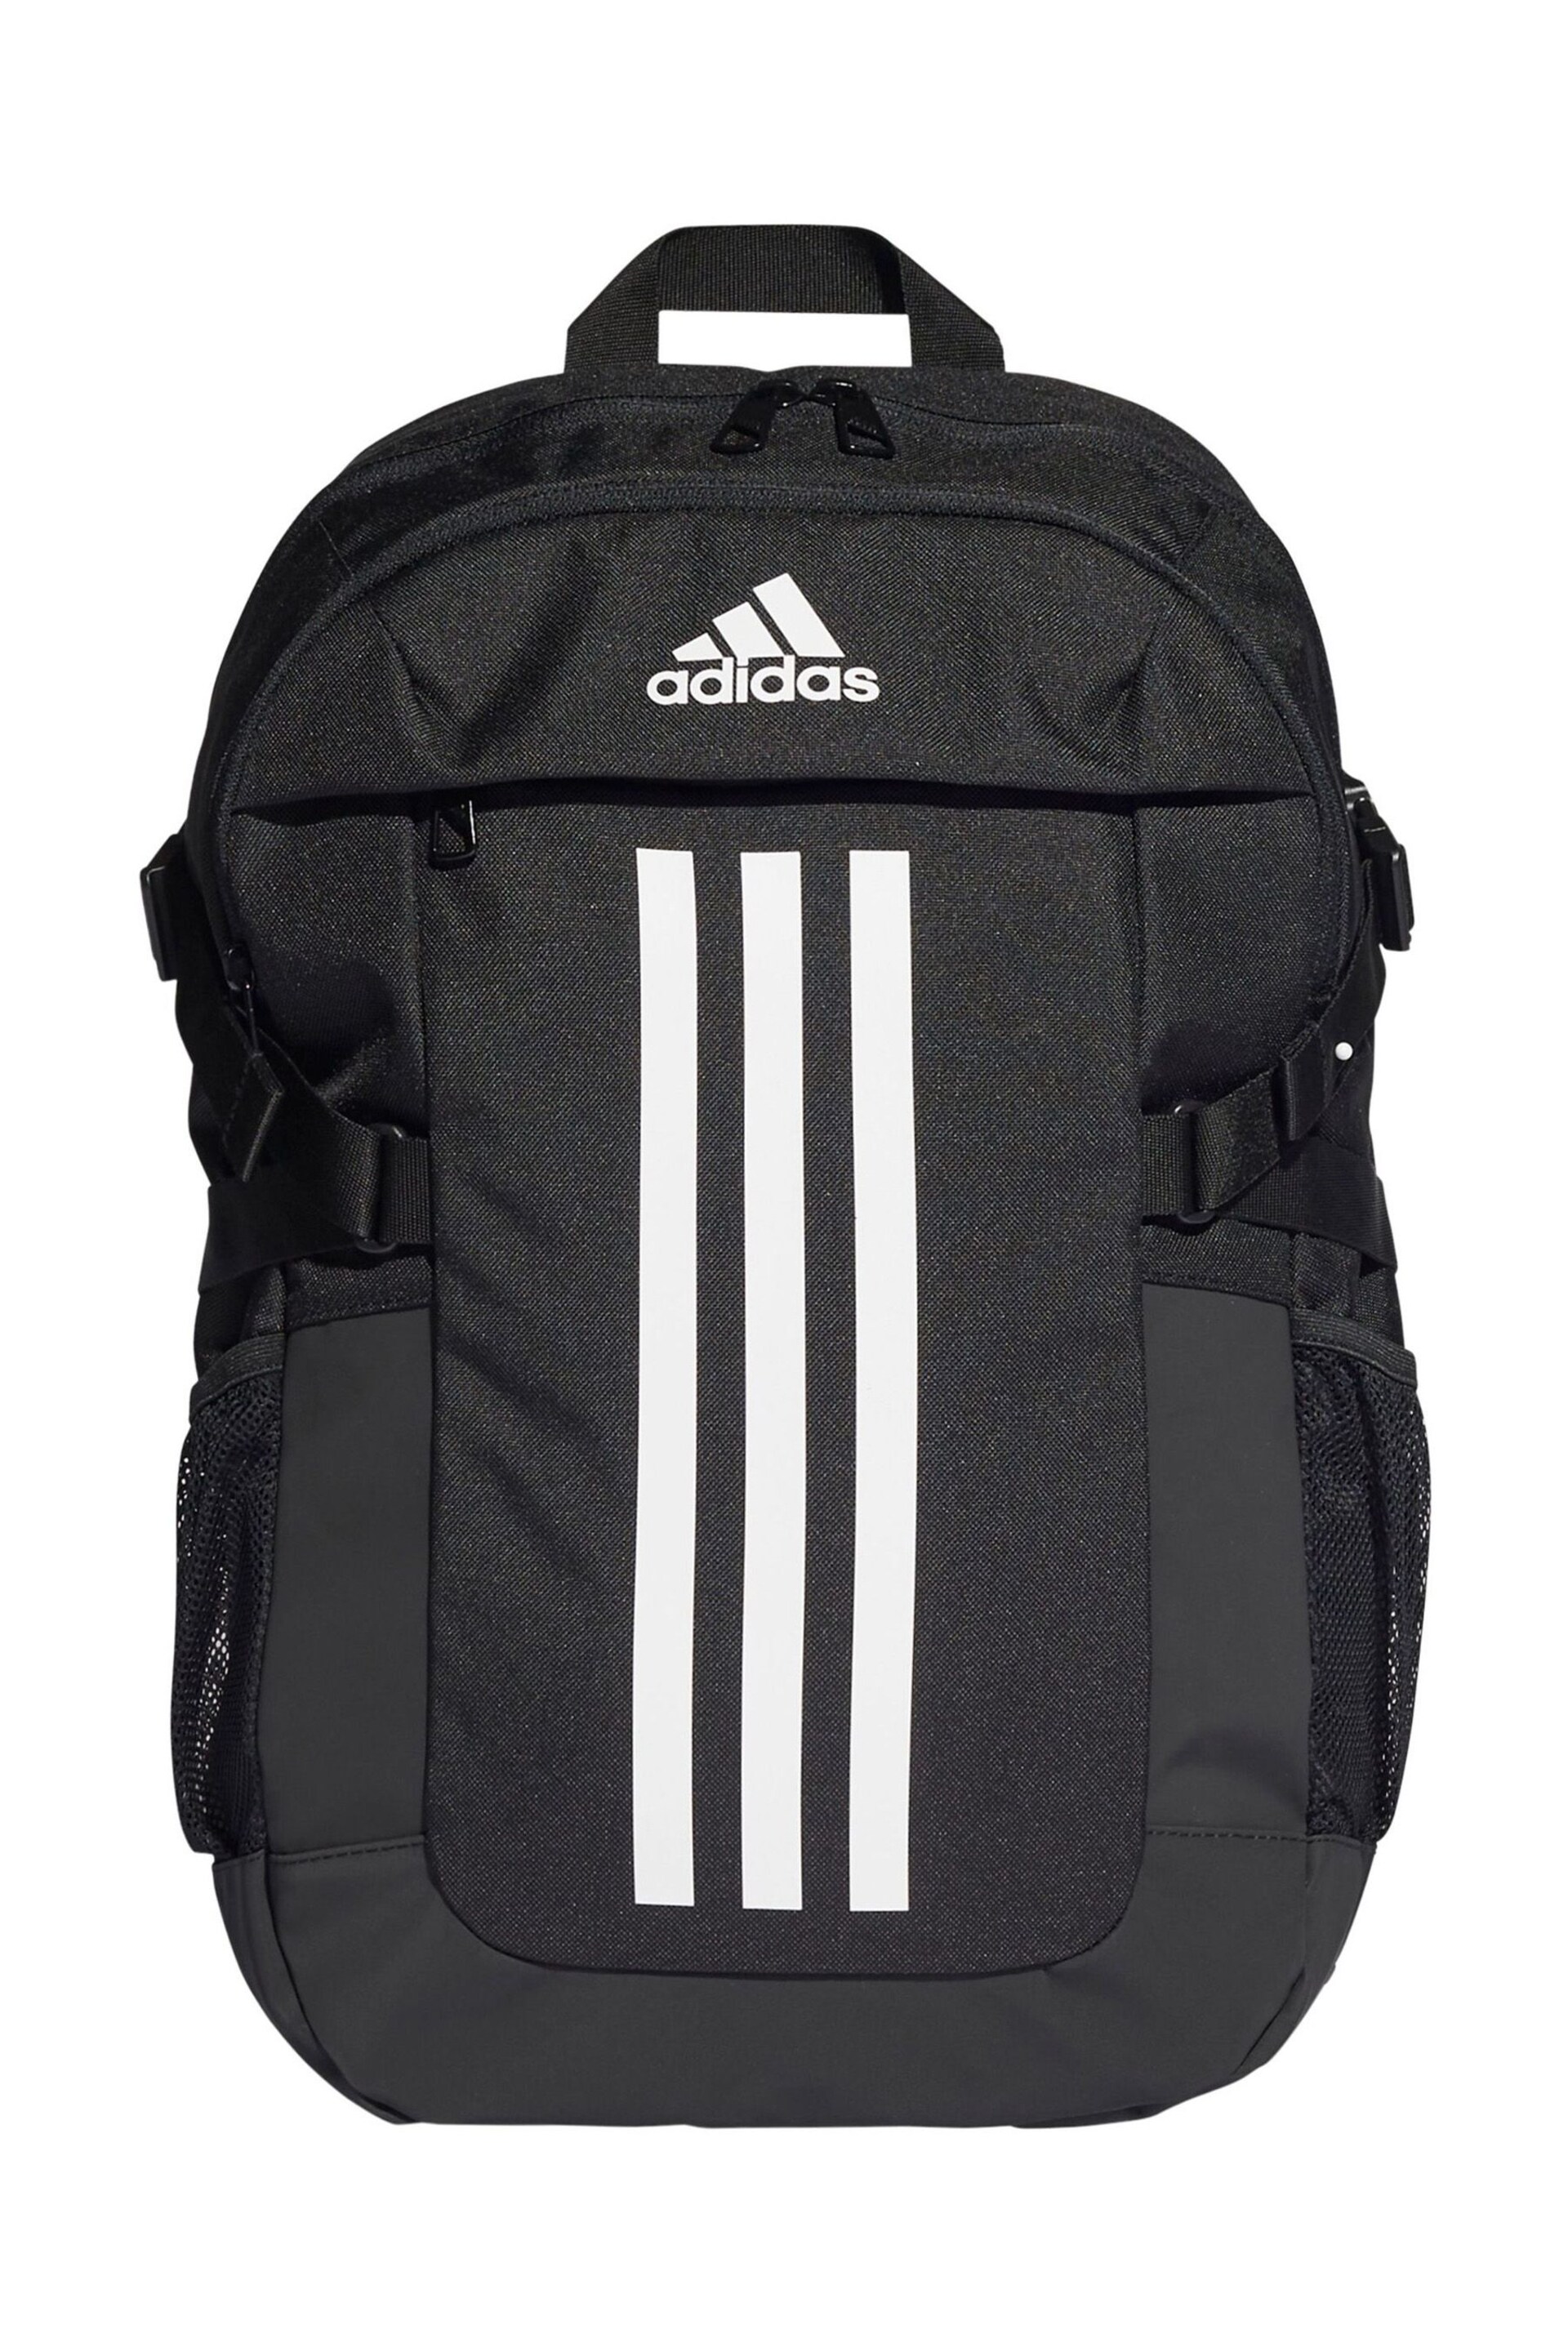 adidas Black/White Power Backpack - Image 2 of 6